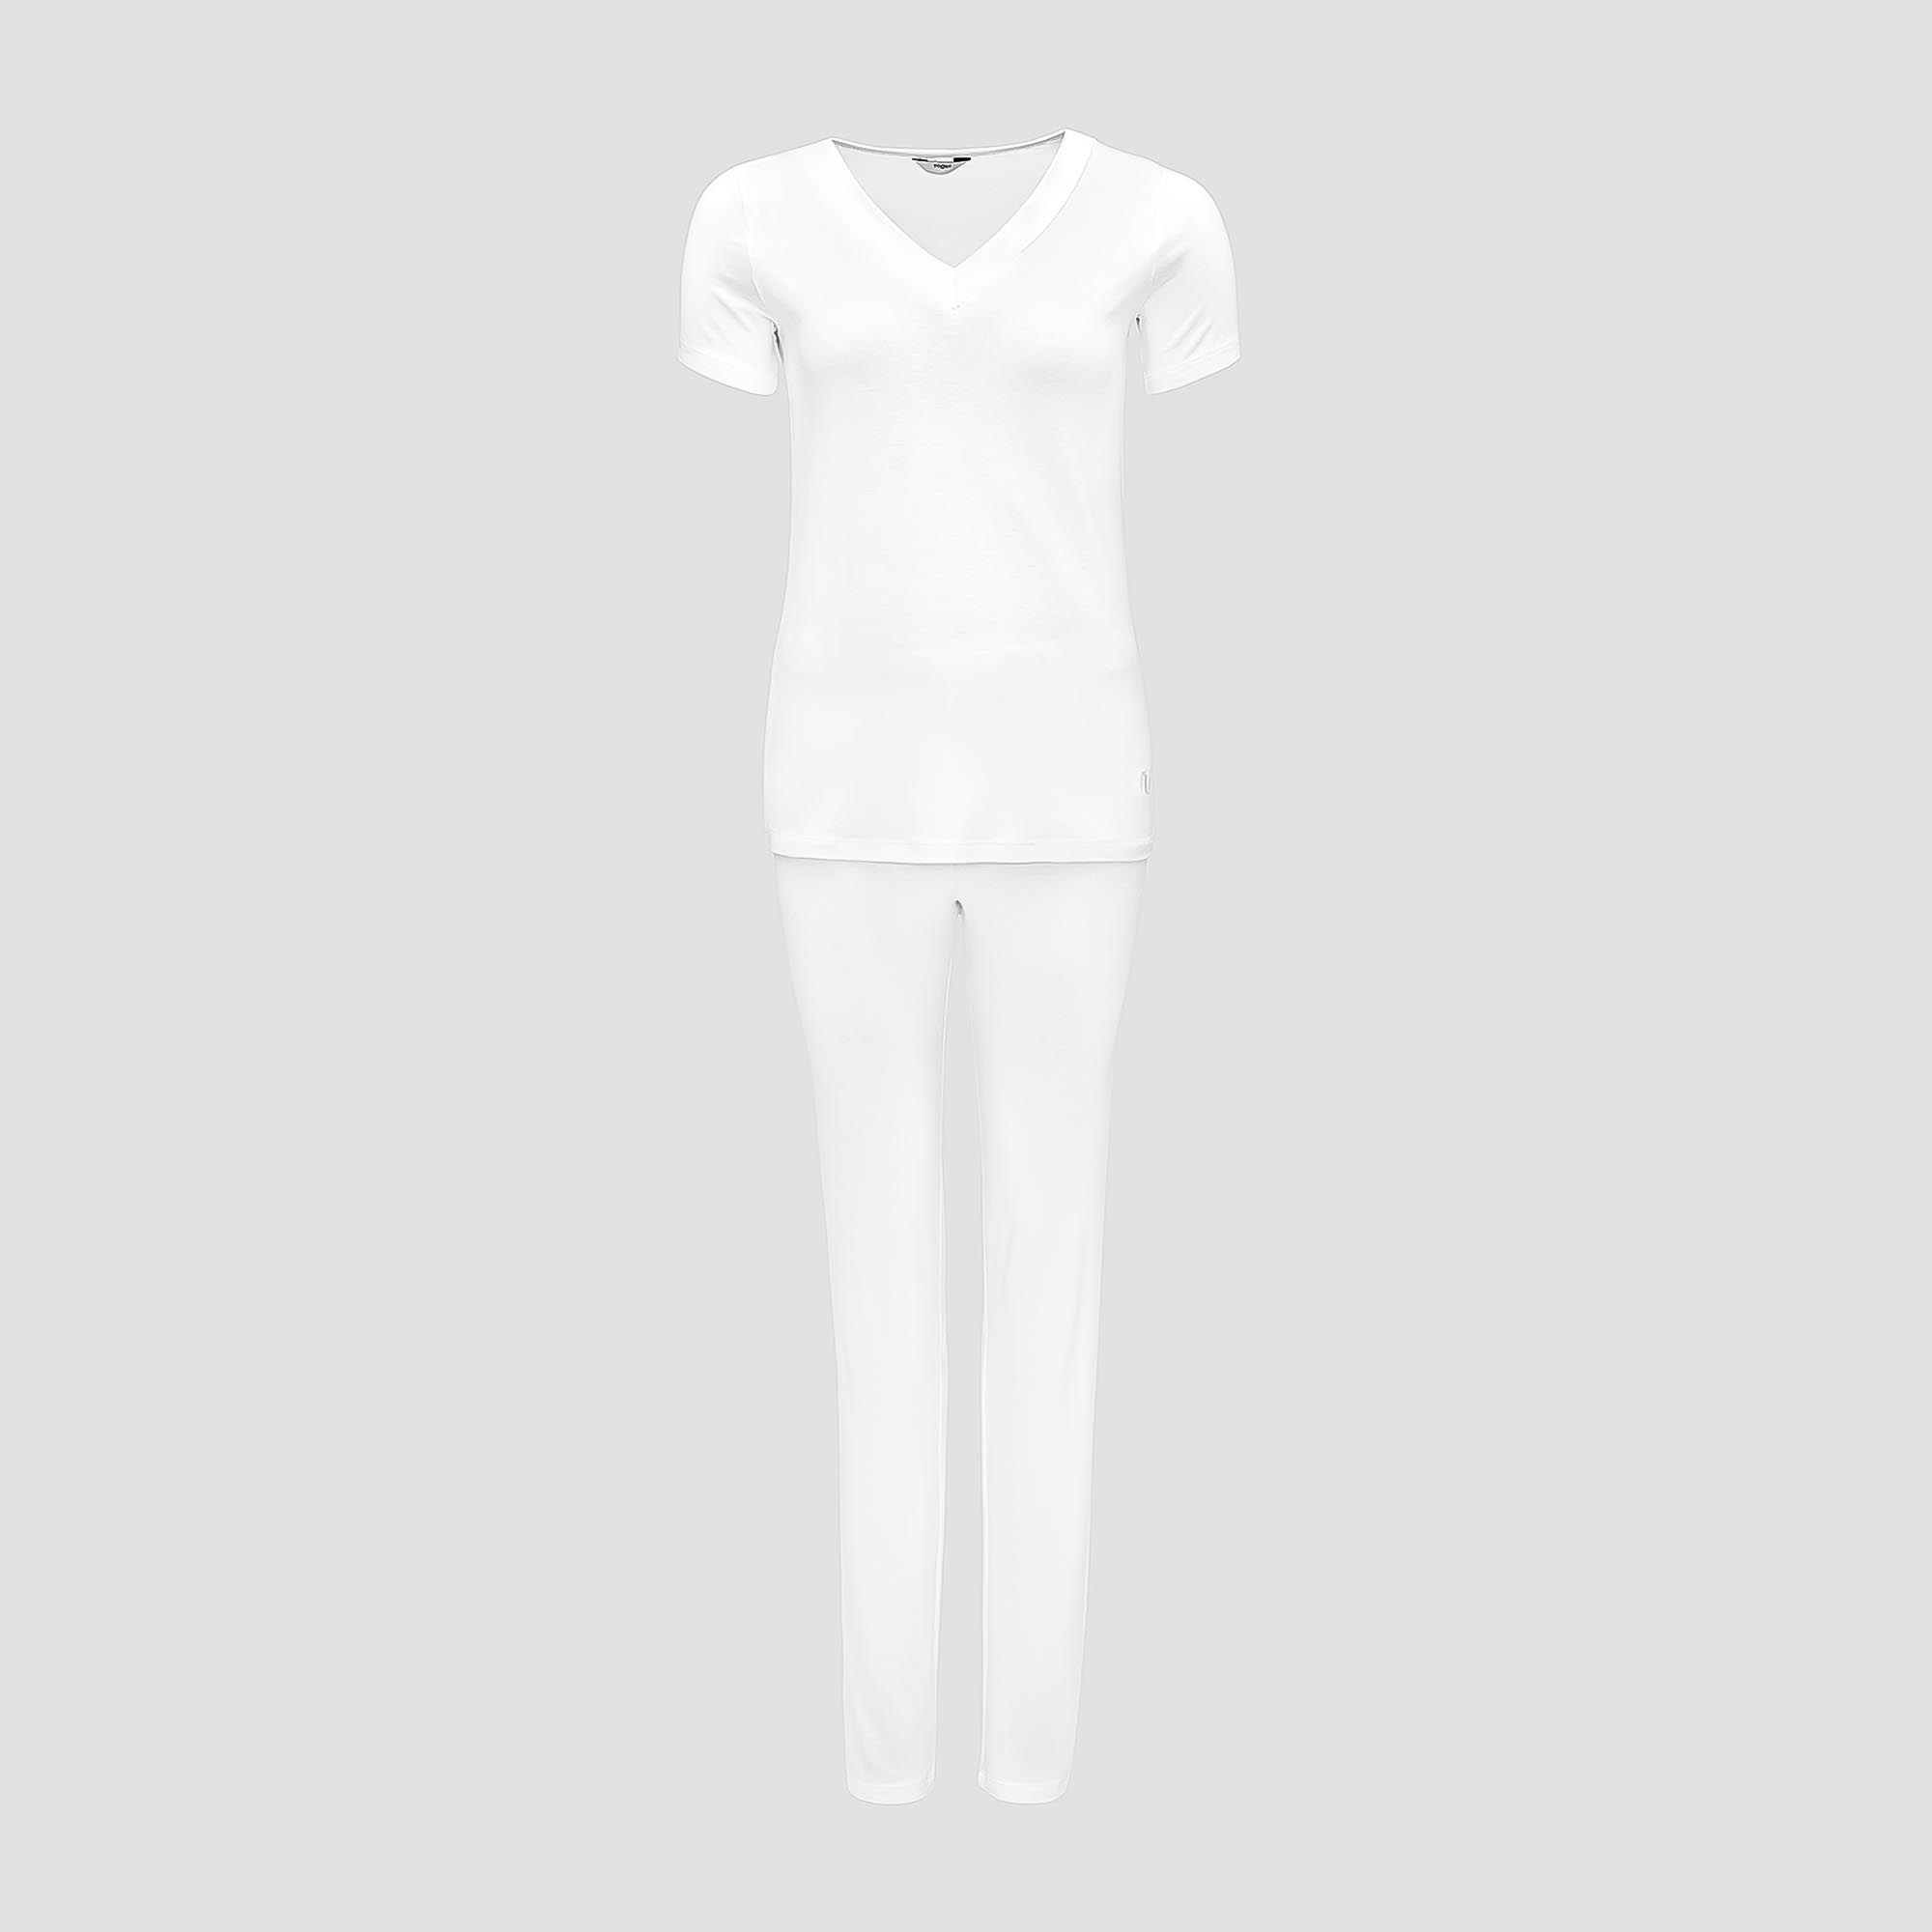 Пижама Togas Ингелла белая женская XXL(52) 2 предмета пижама рубашка брюки